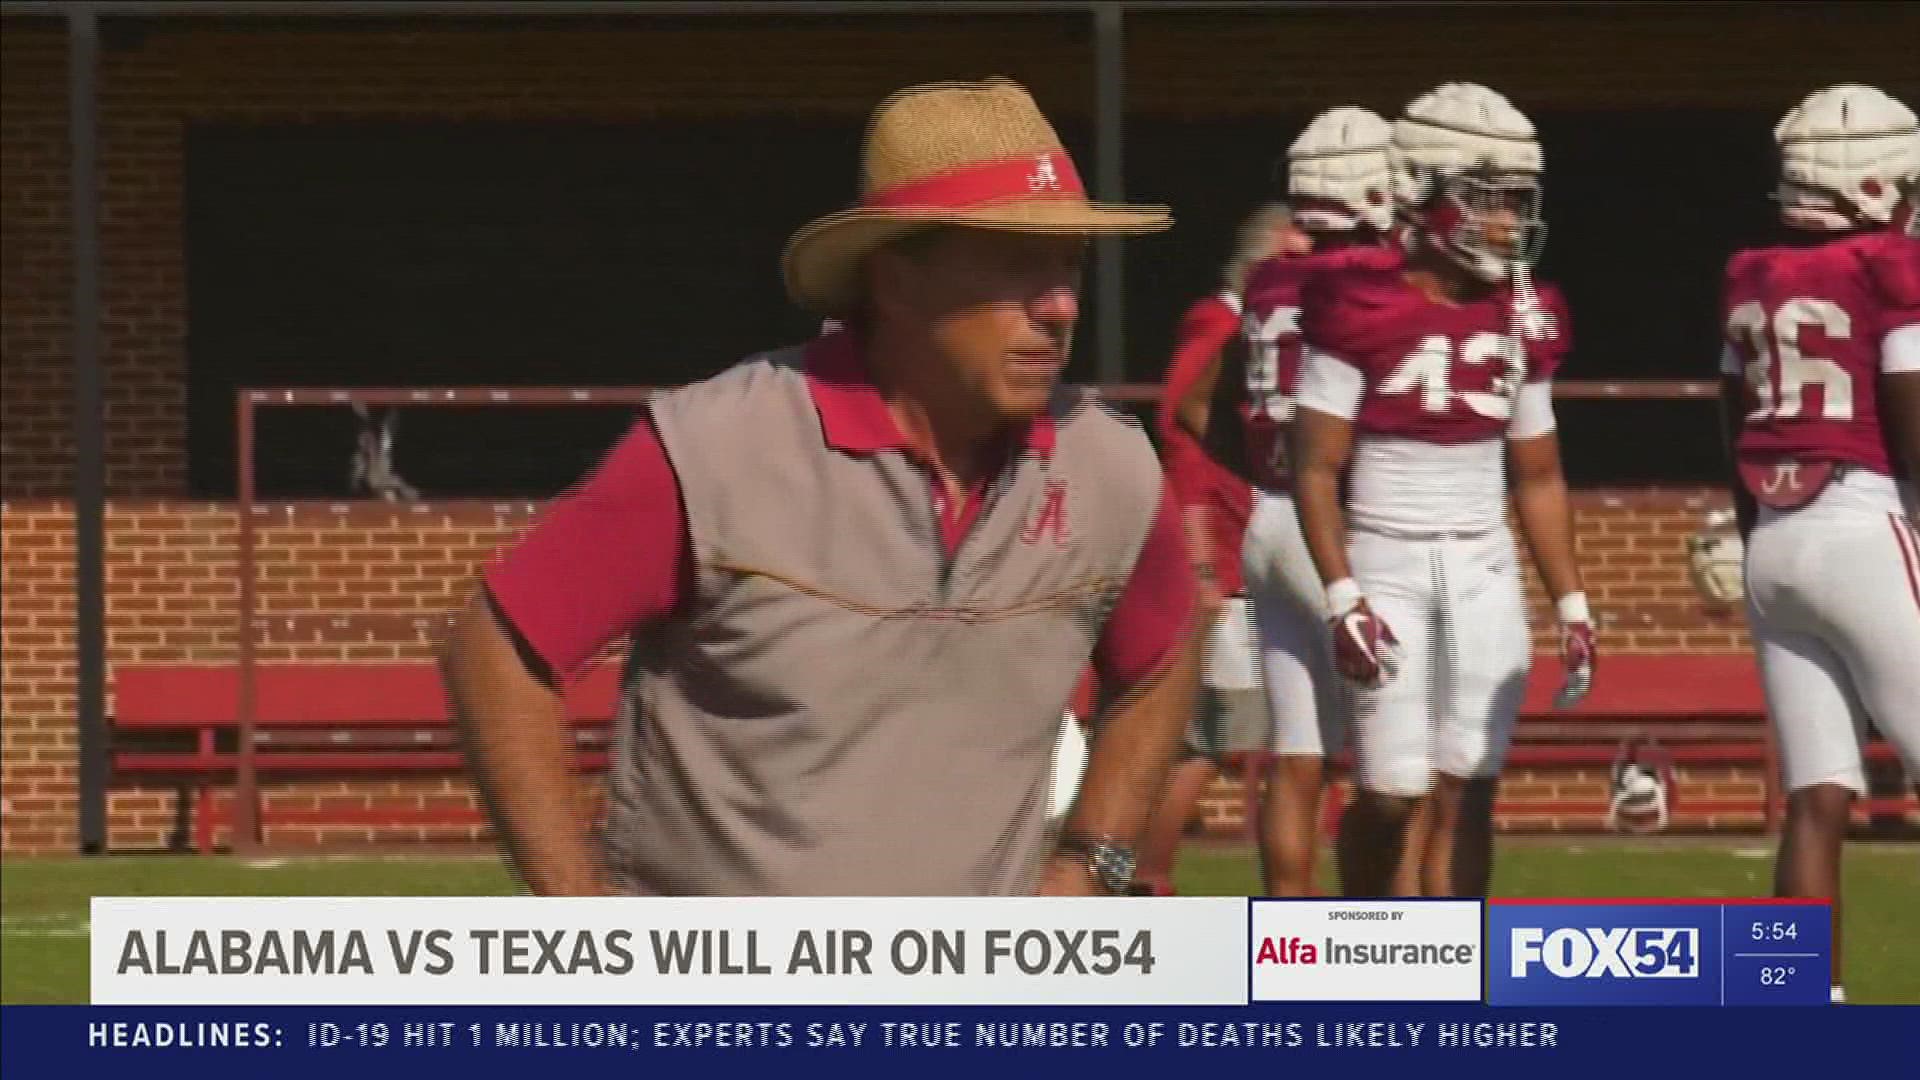 The 2022 Alabama Crimson Tide at Texas Longhorns football game will be air FOX